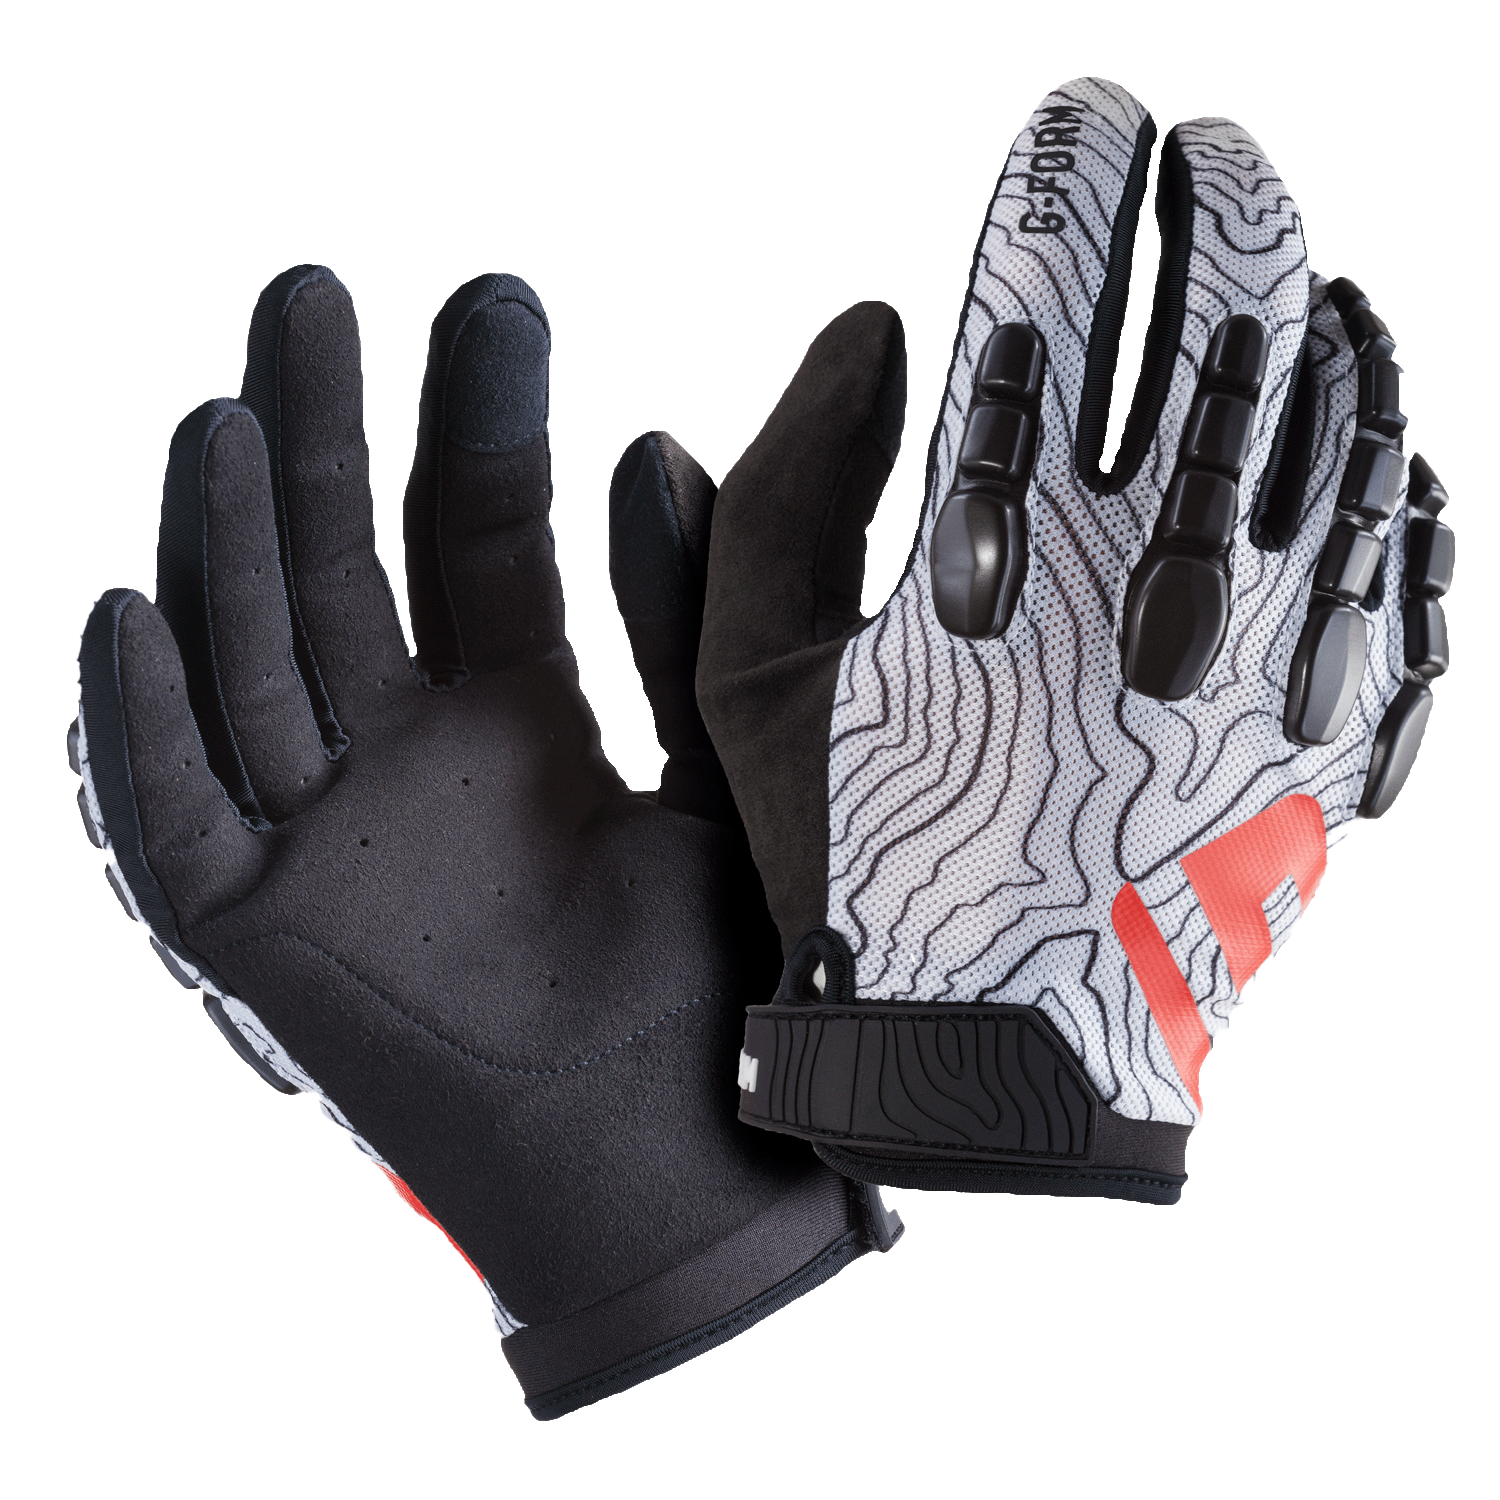 Pro Trail Mountain Bike Gloves